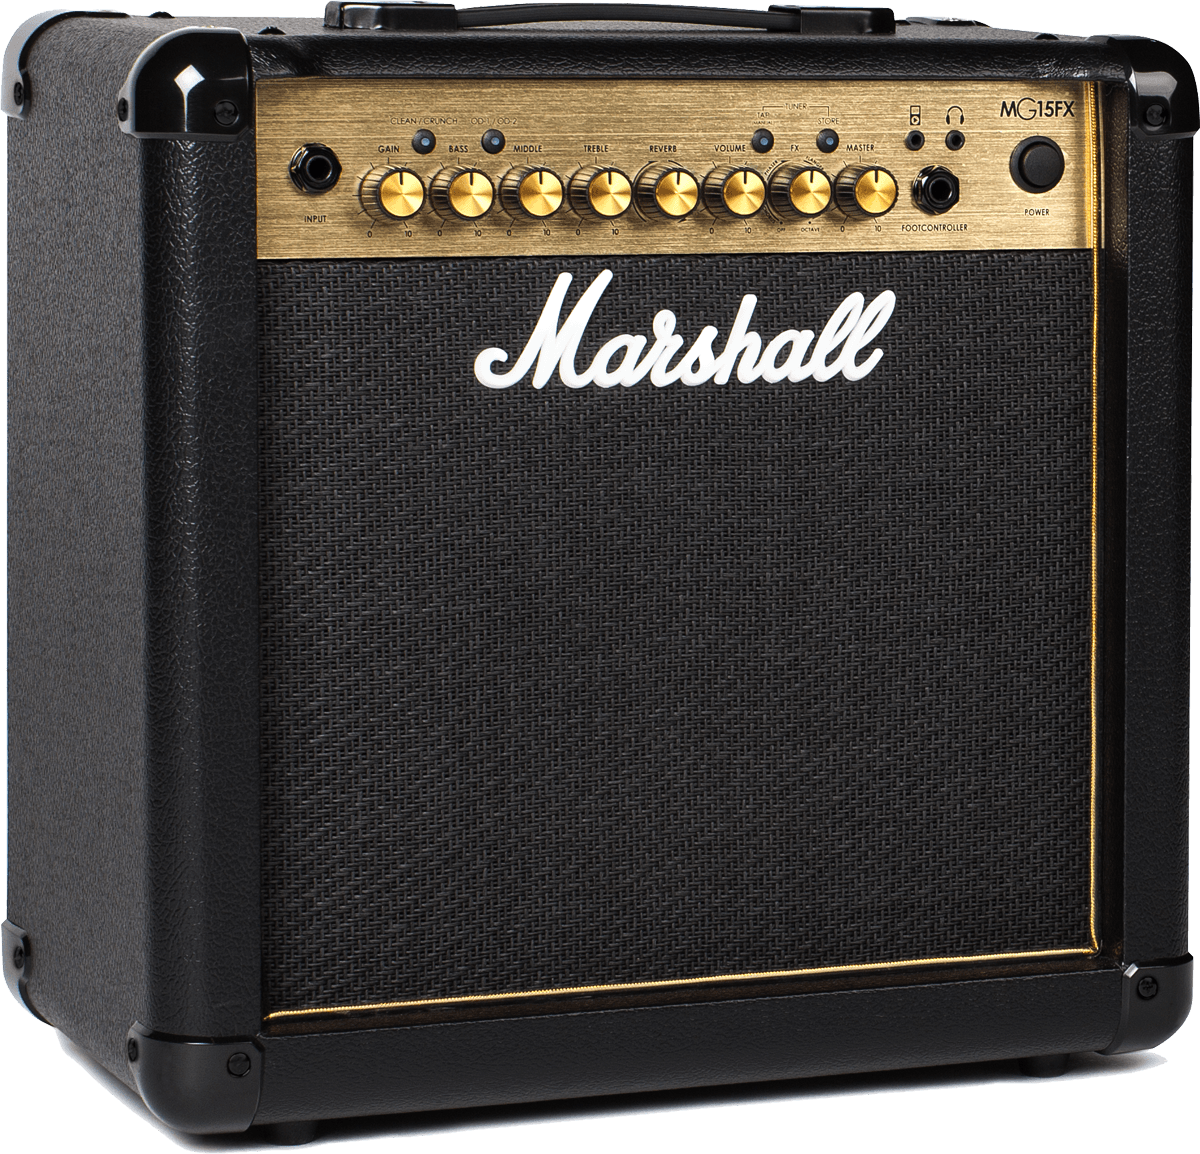 Marshall MG15GFX Gold 15 Watt Guitar Amplifier Combo